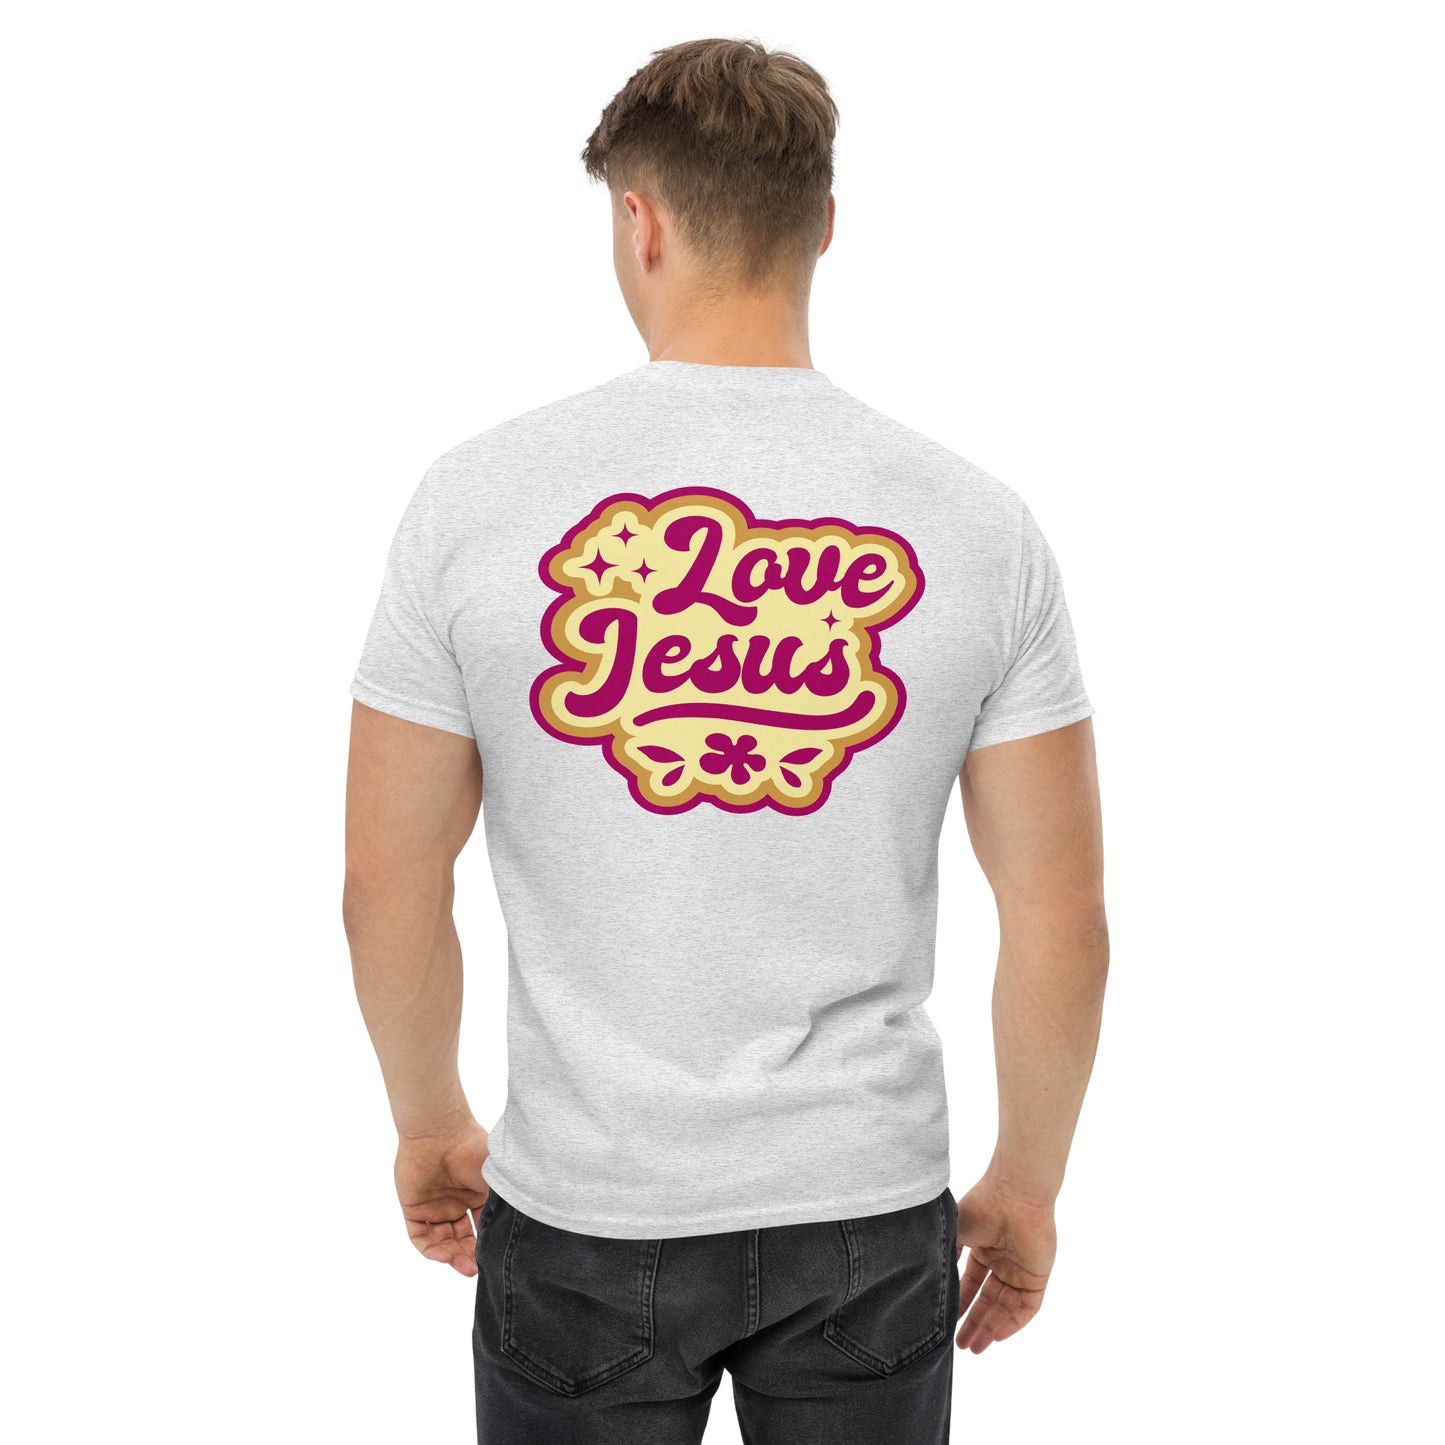 Love Jesus (Back)